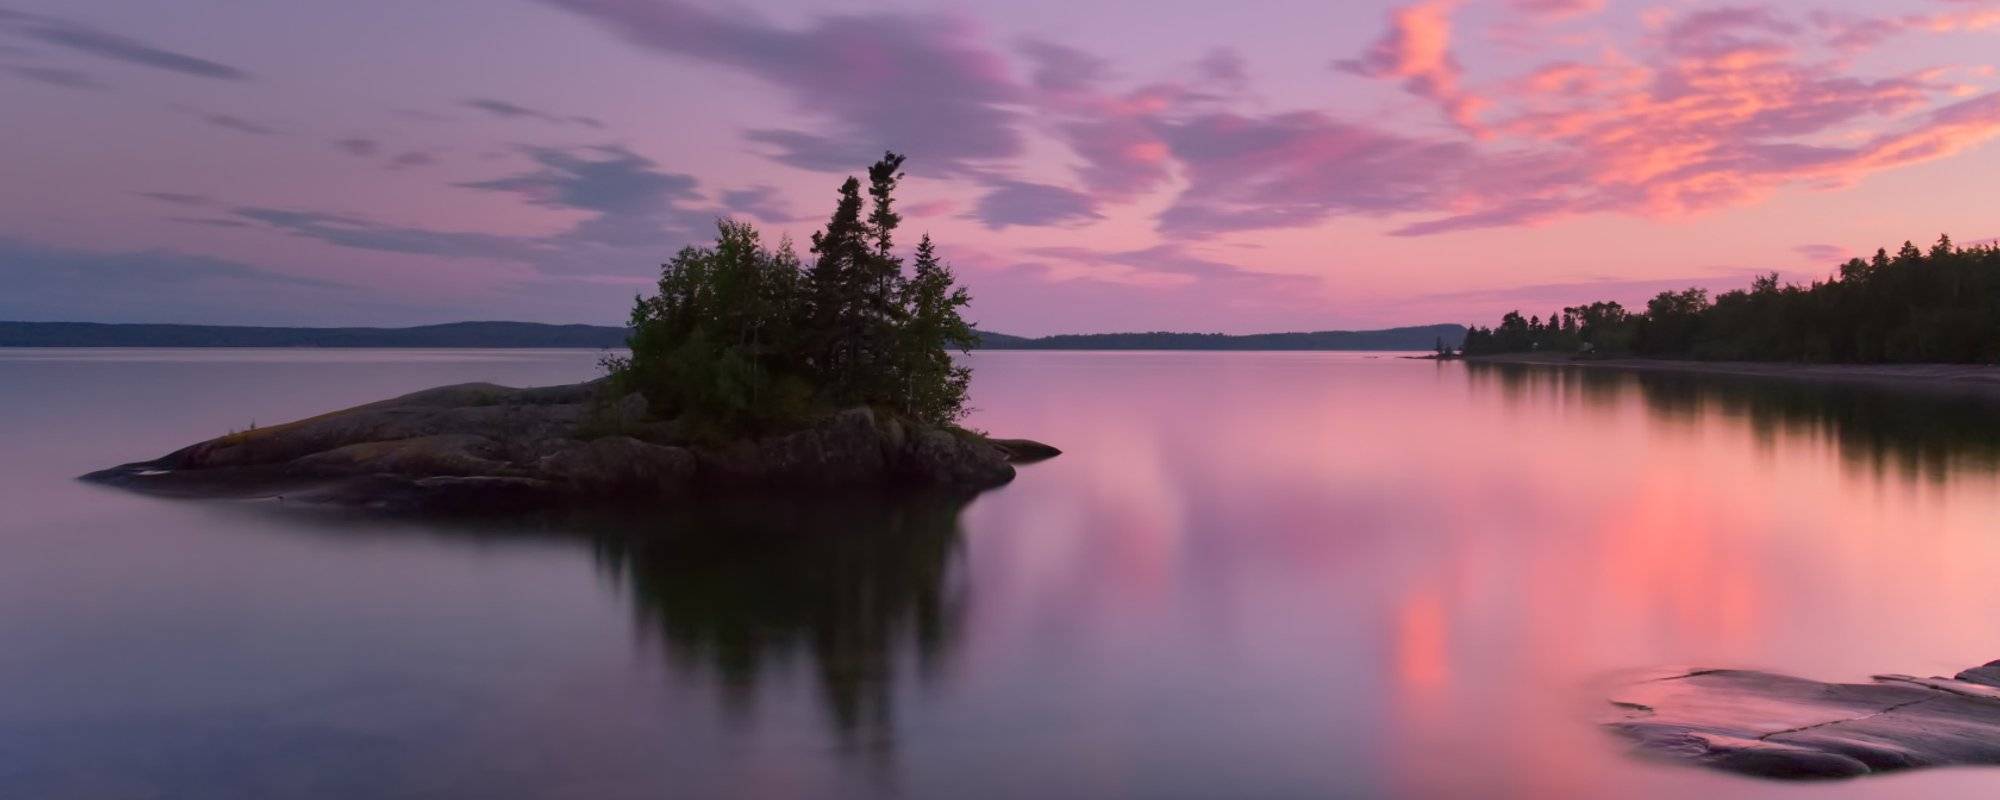 A Journey Through Ontario - Home to Over 250,000 Lakes